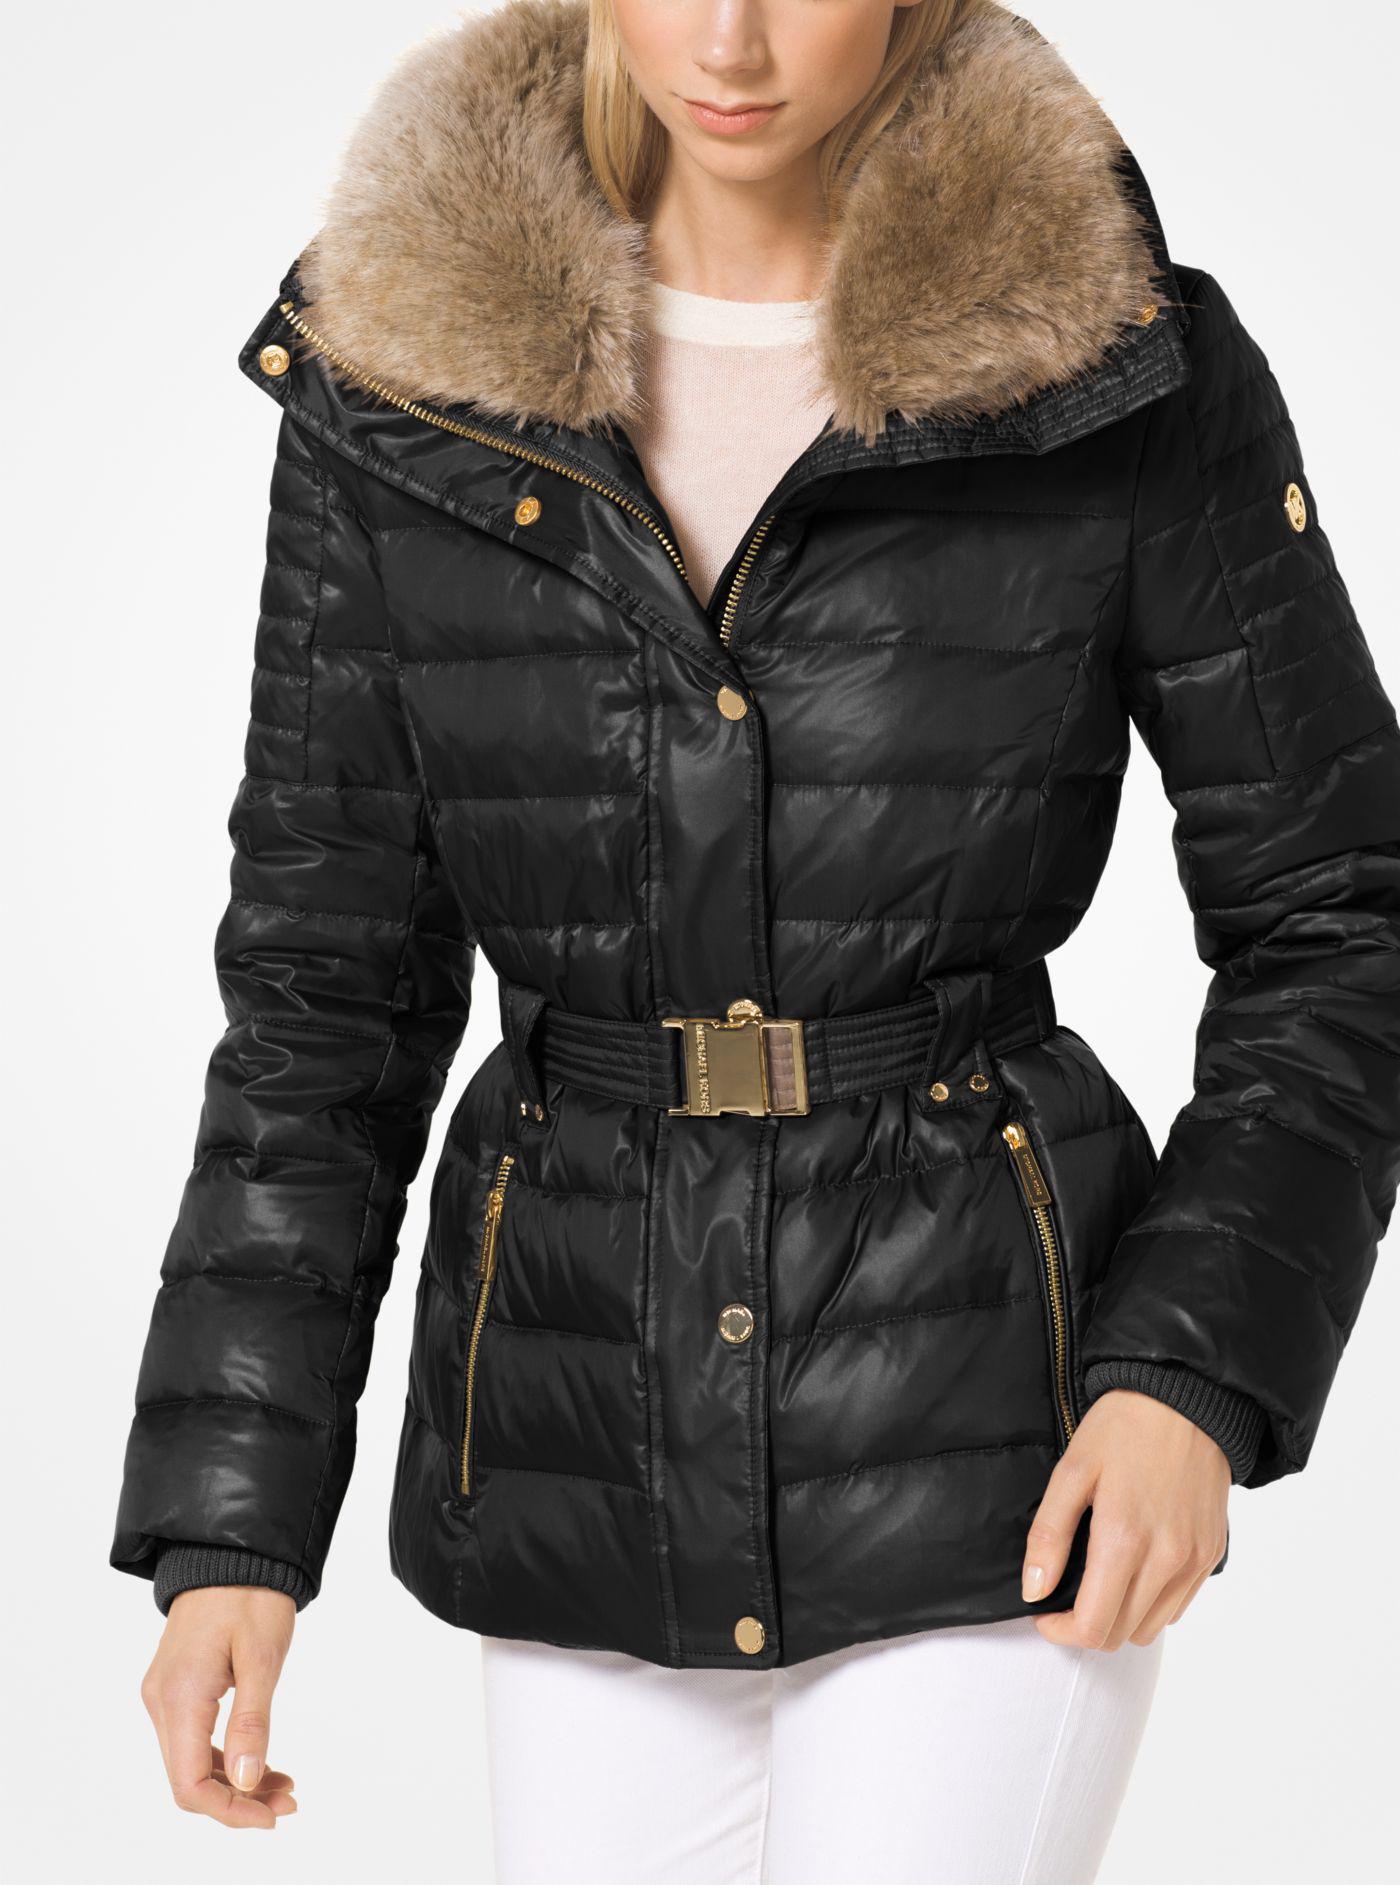 Long Winter Coats Womens Michael Kors Netherlands SAVE 50  eagleflaircom